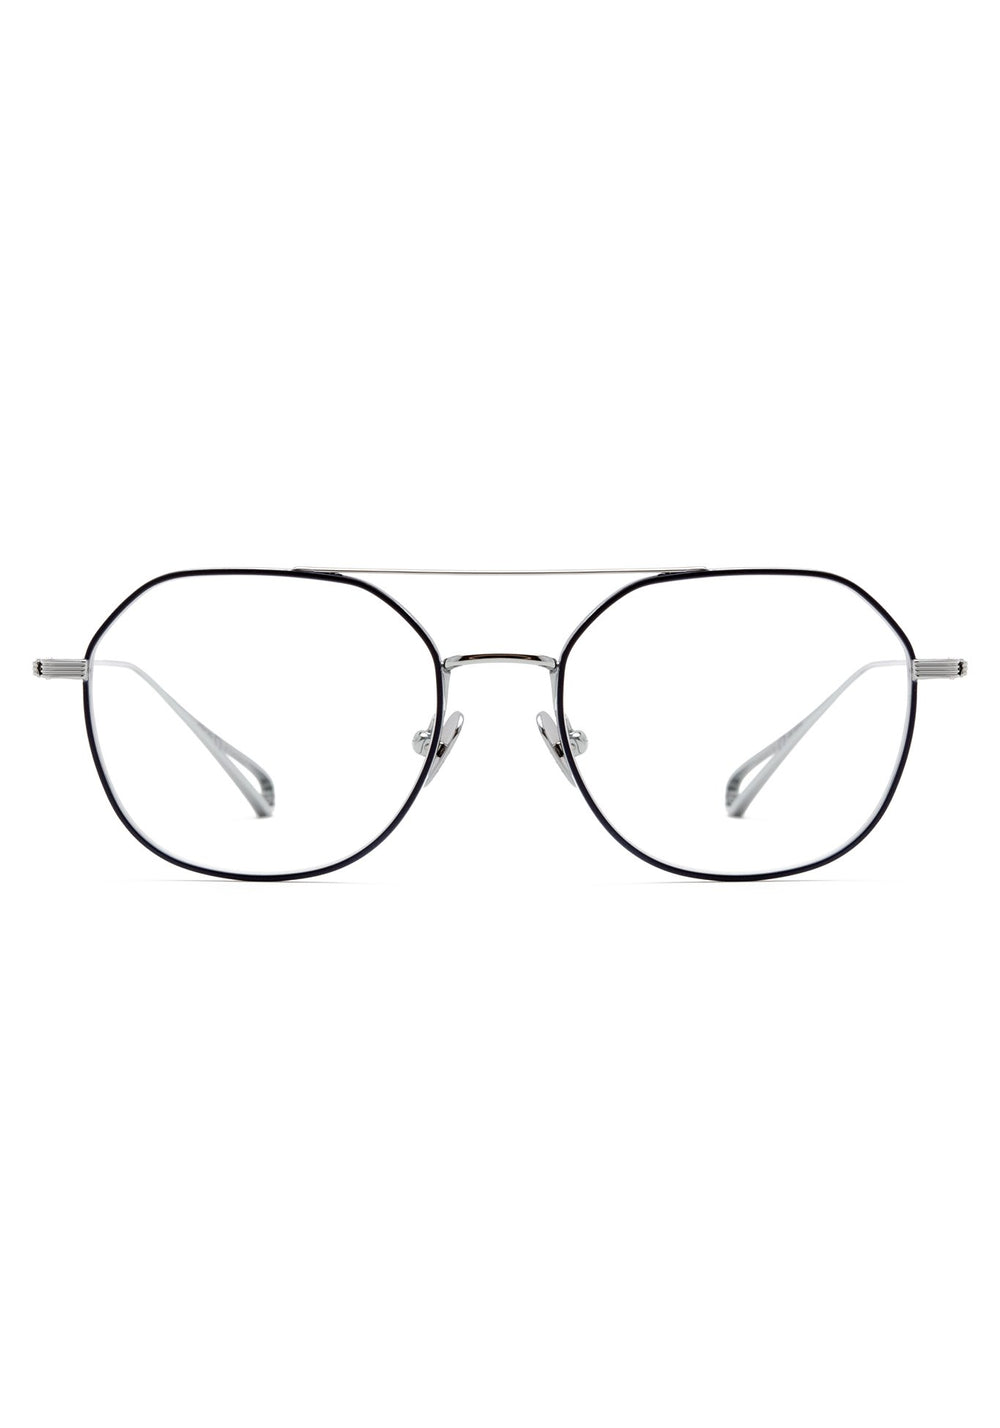 KREWE - MESA | Matte Indigo + Titanium Handcrafted, luxury metal eyeglasses